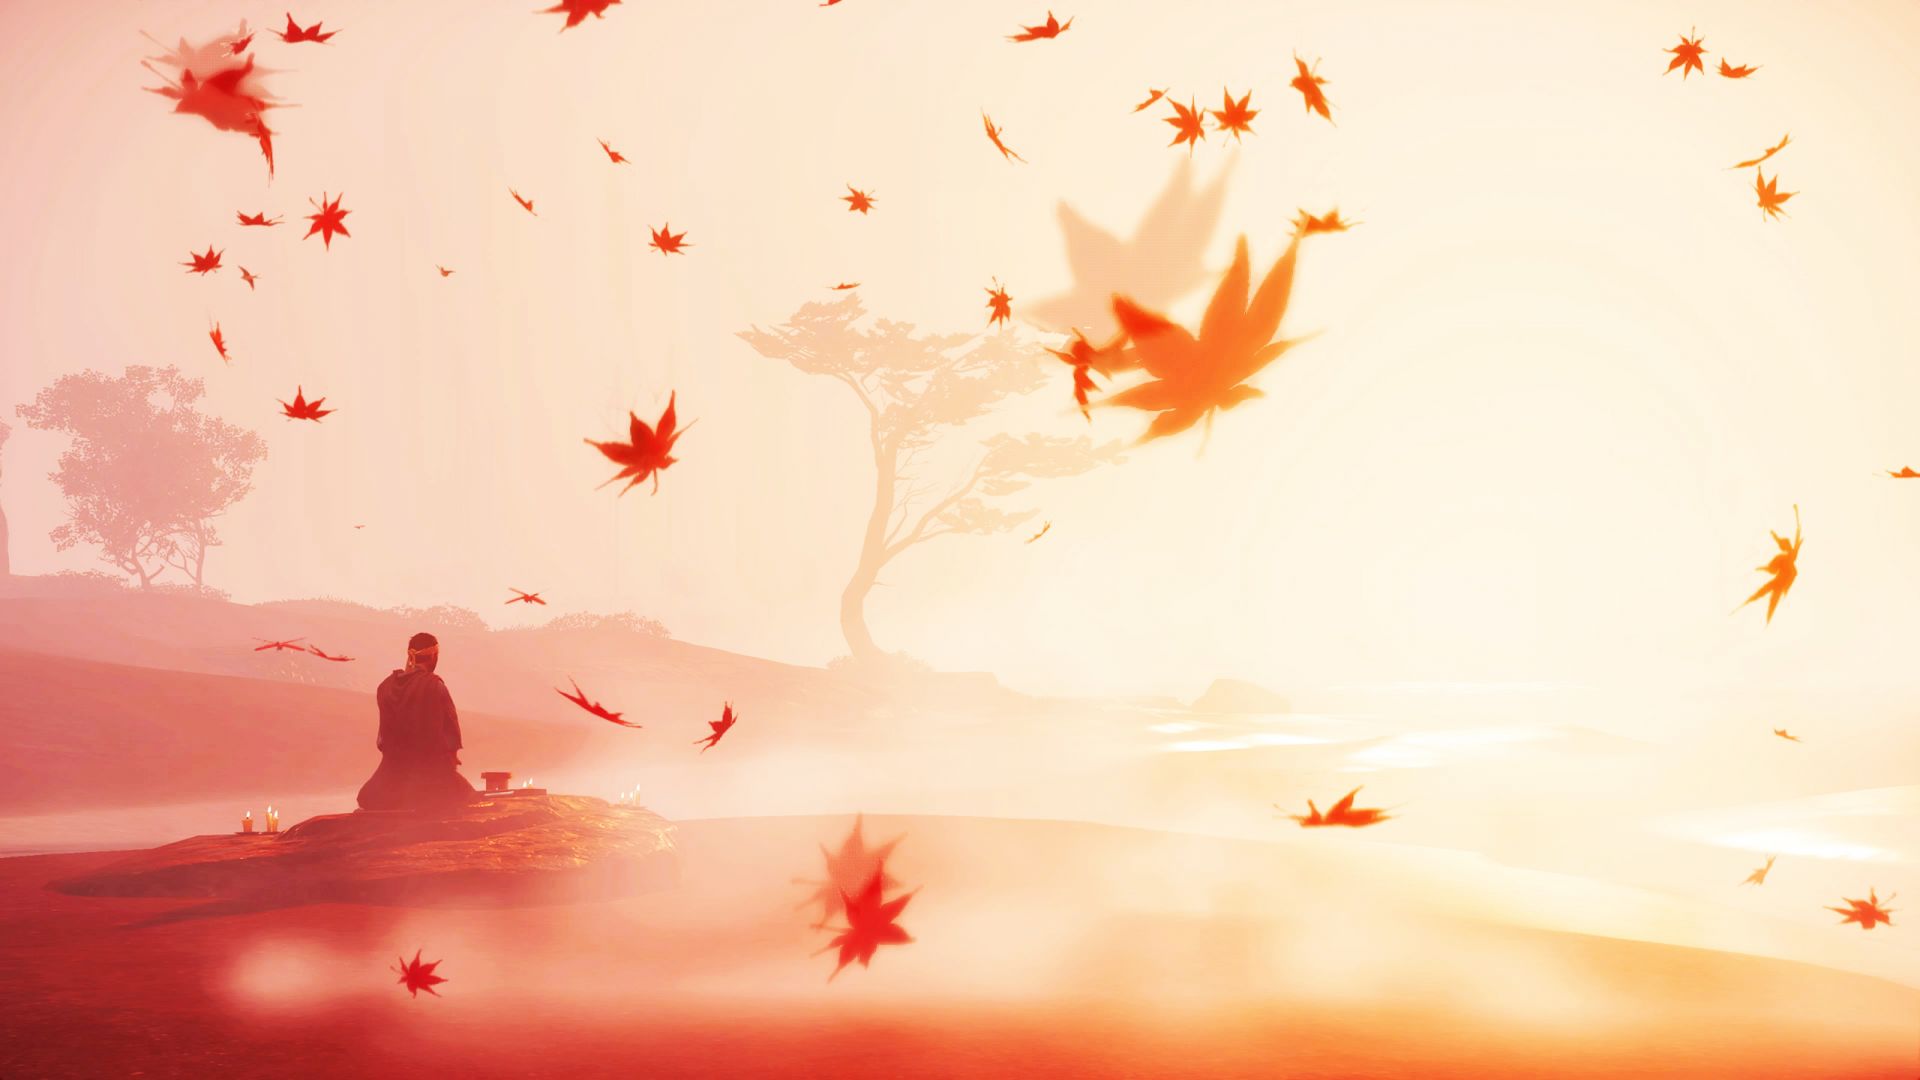 Wallpaper ghost of tsushima, autumn, falling leaves desktop wallpaper, HD image, picture, background, c3ba16